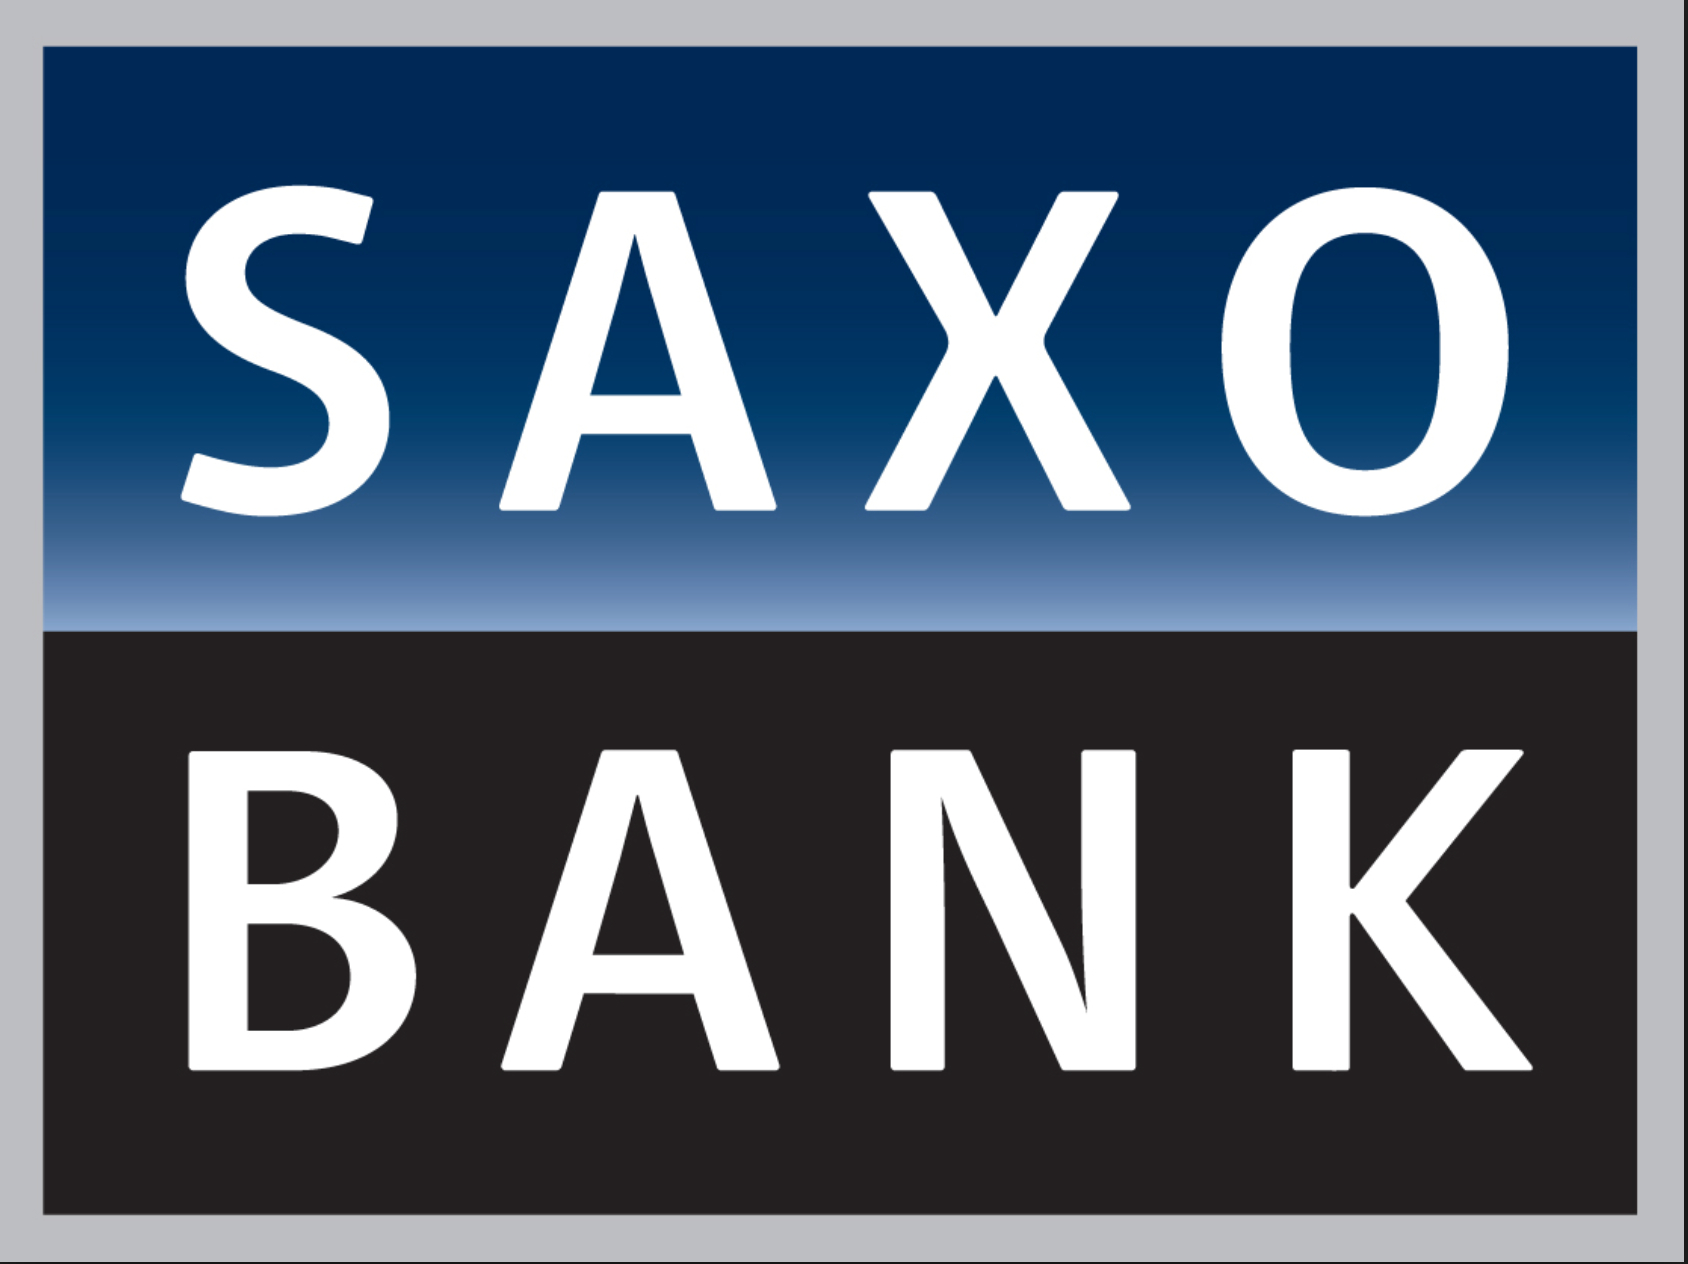 Saxo Bank Enhances its Presence in Greater China with Strategic Partnership